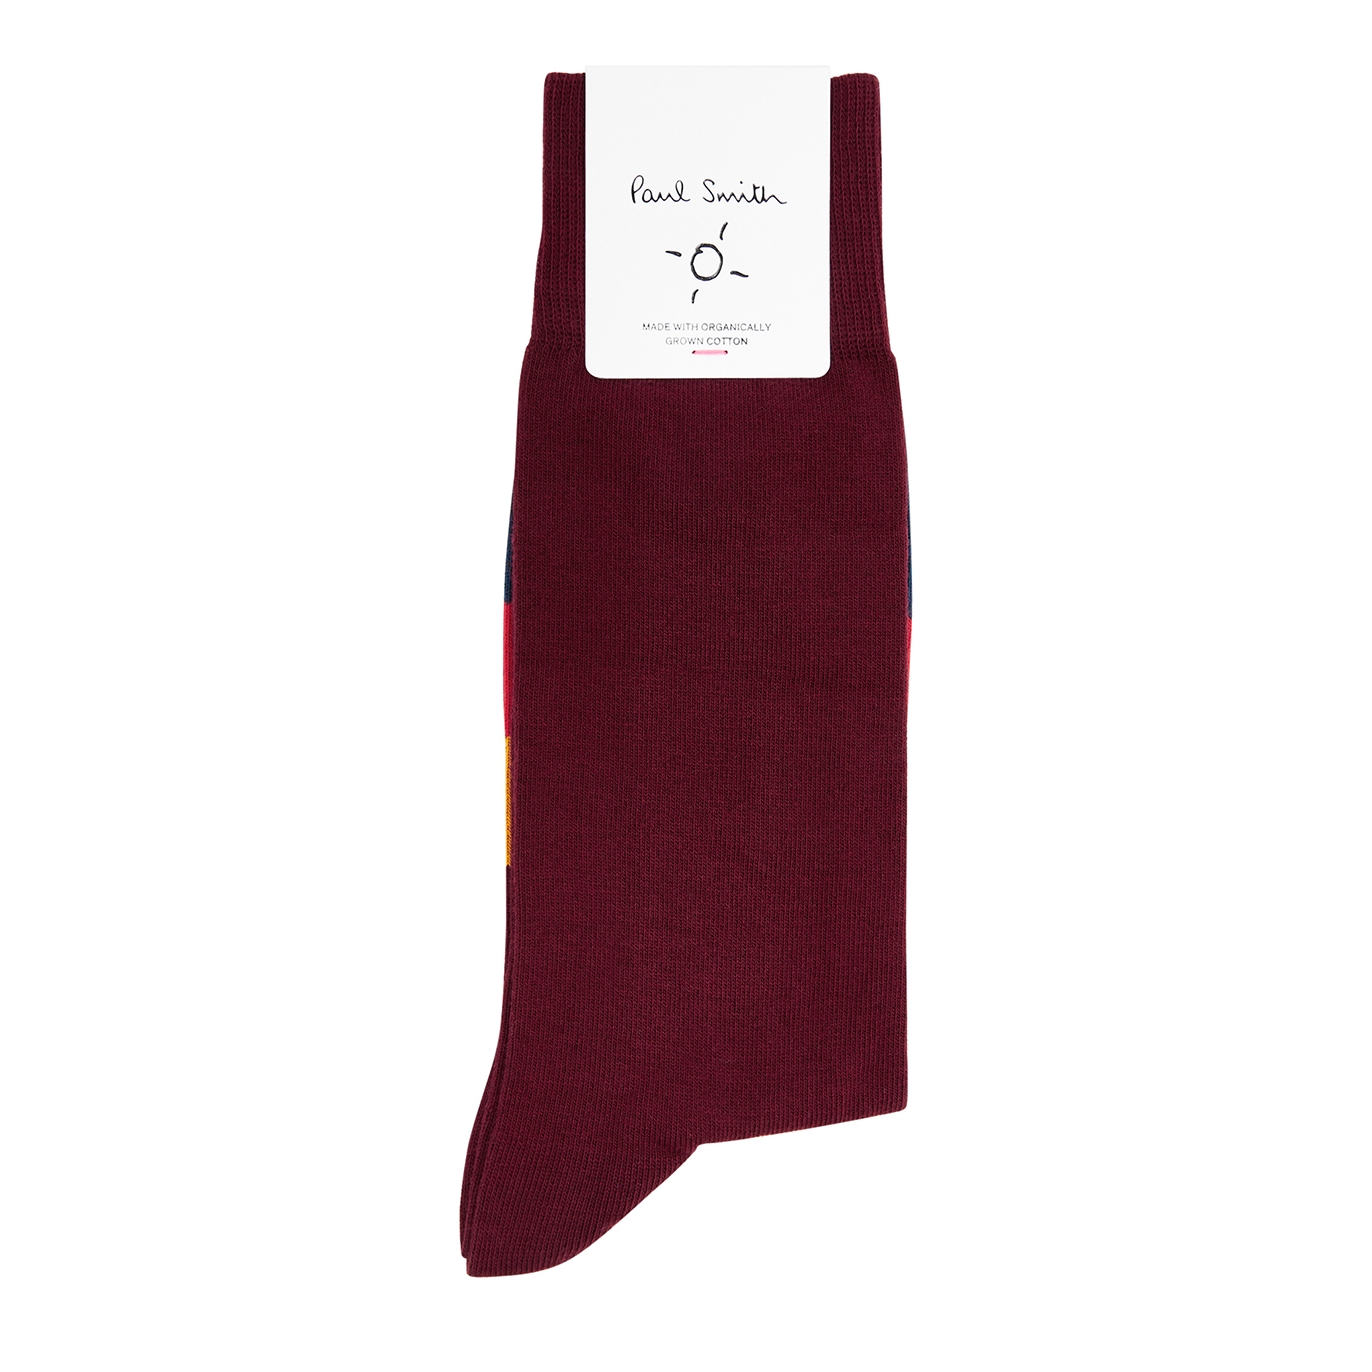 Paul Smith Striped Cotton-blend Socks - Burgundy - One Size